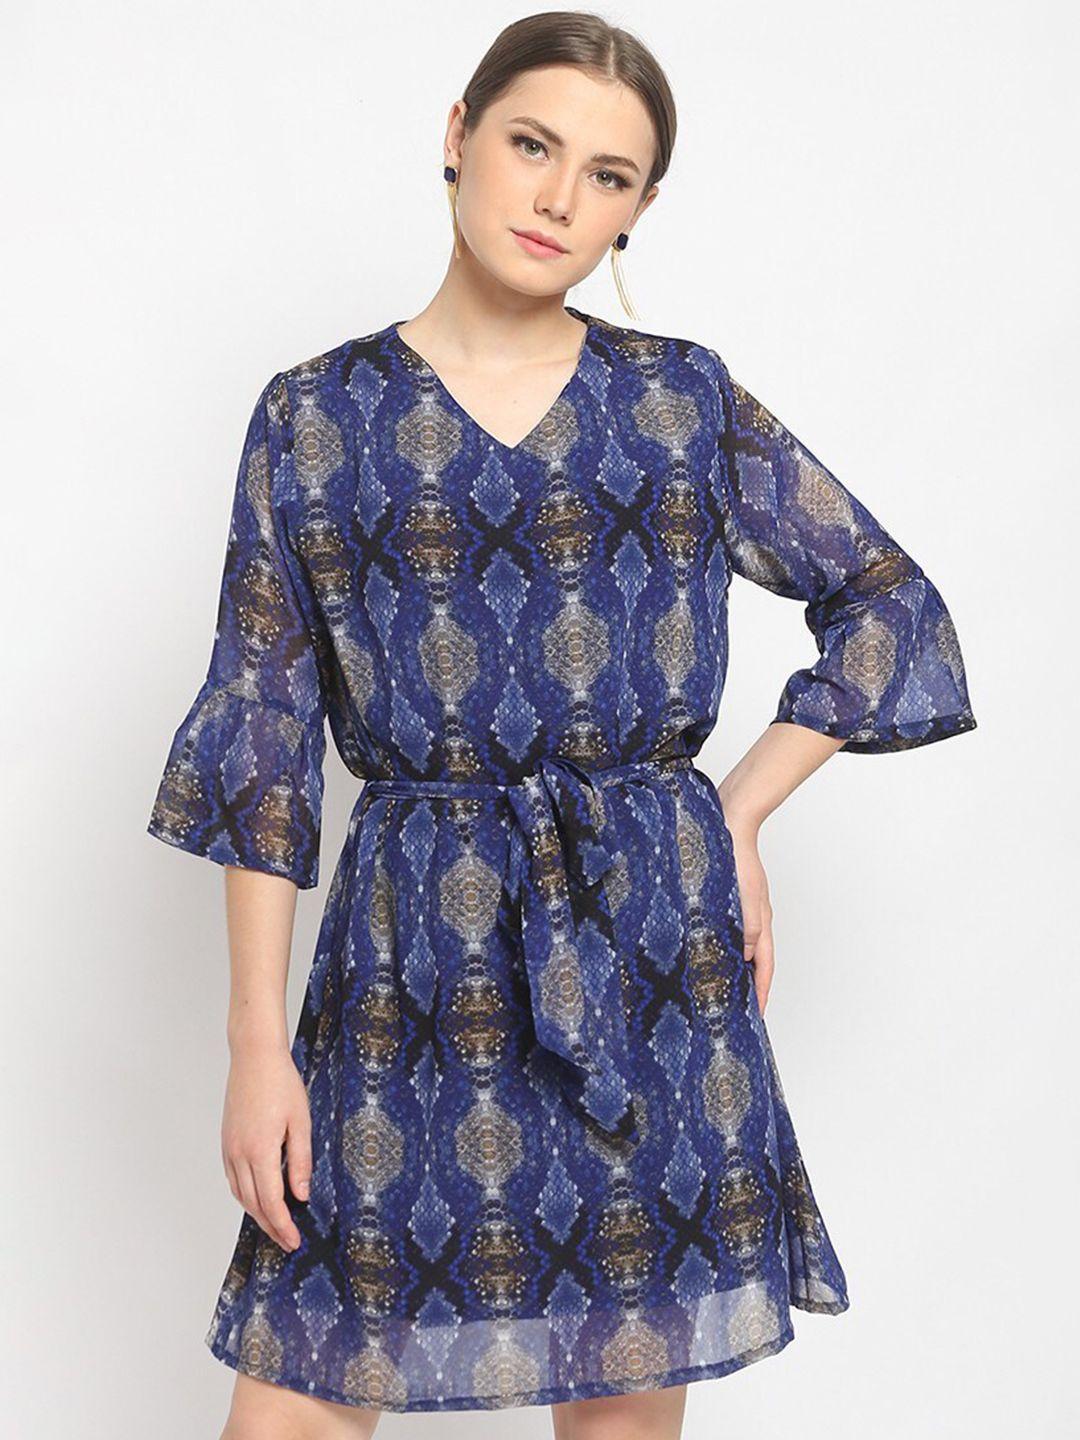 chanira la parezza blue & grey animal printed a-line dress